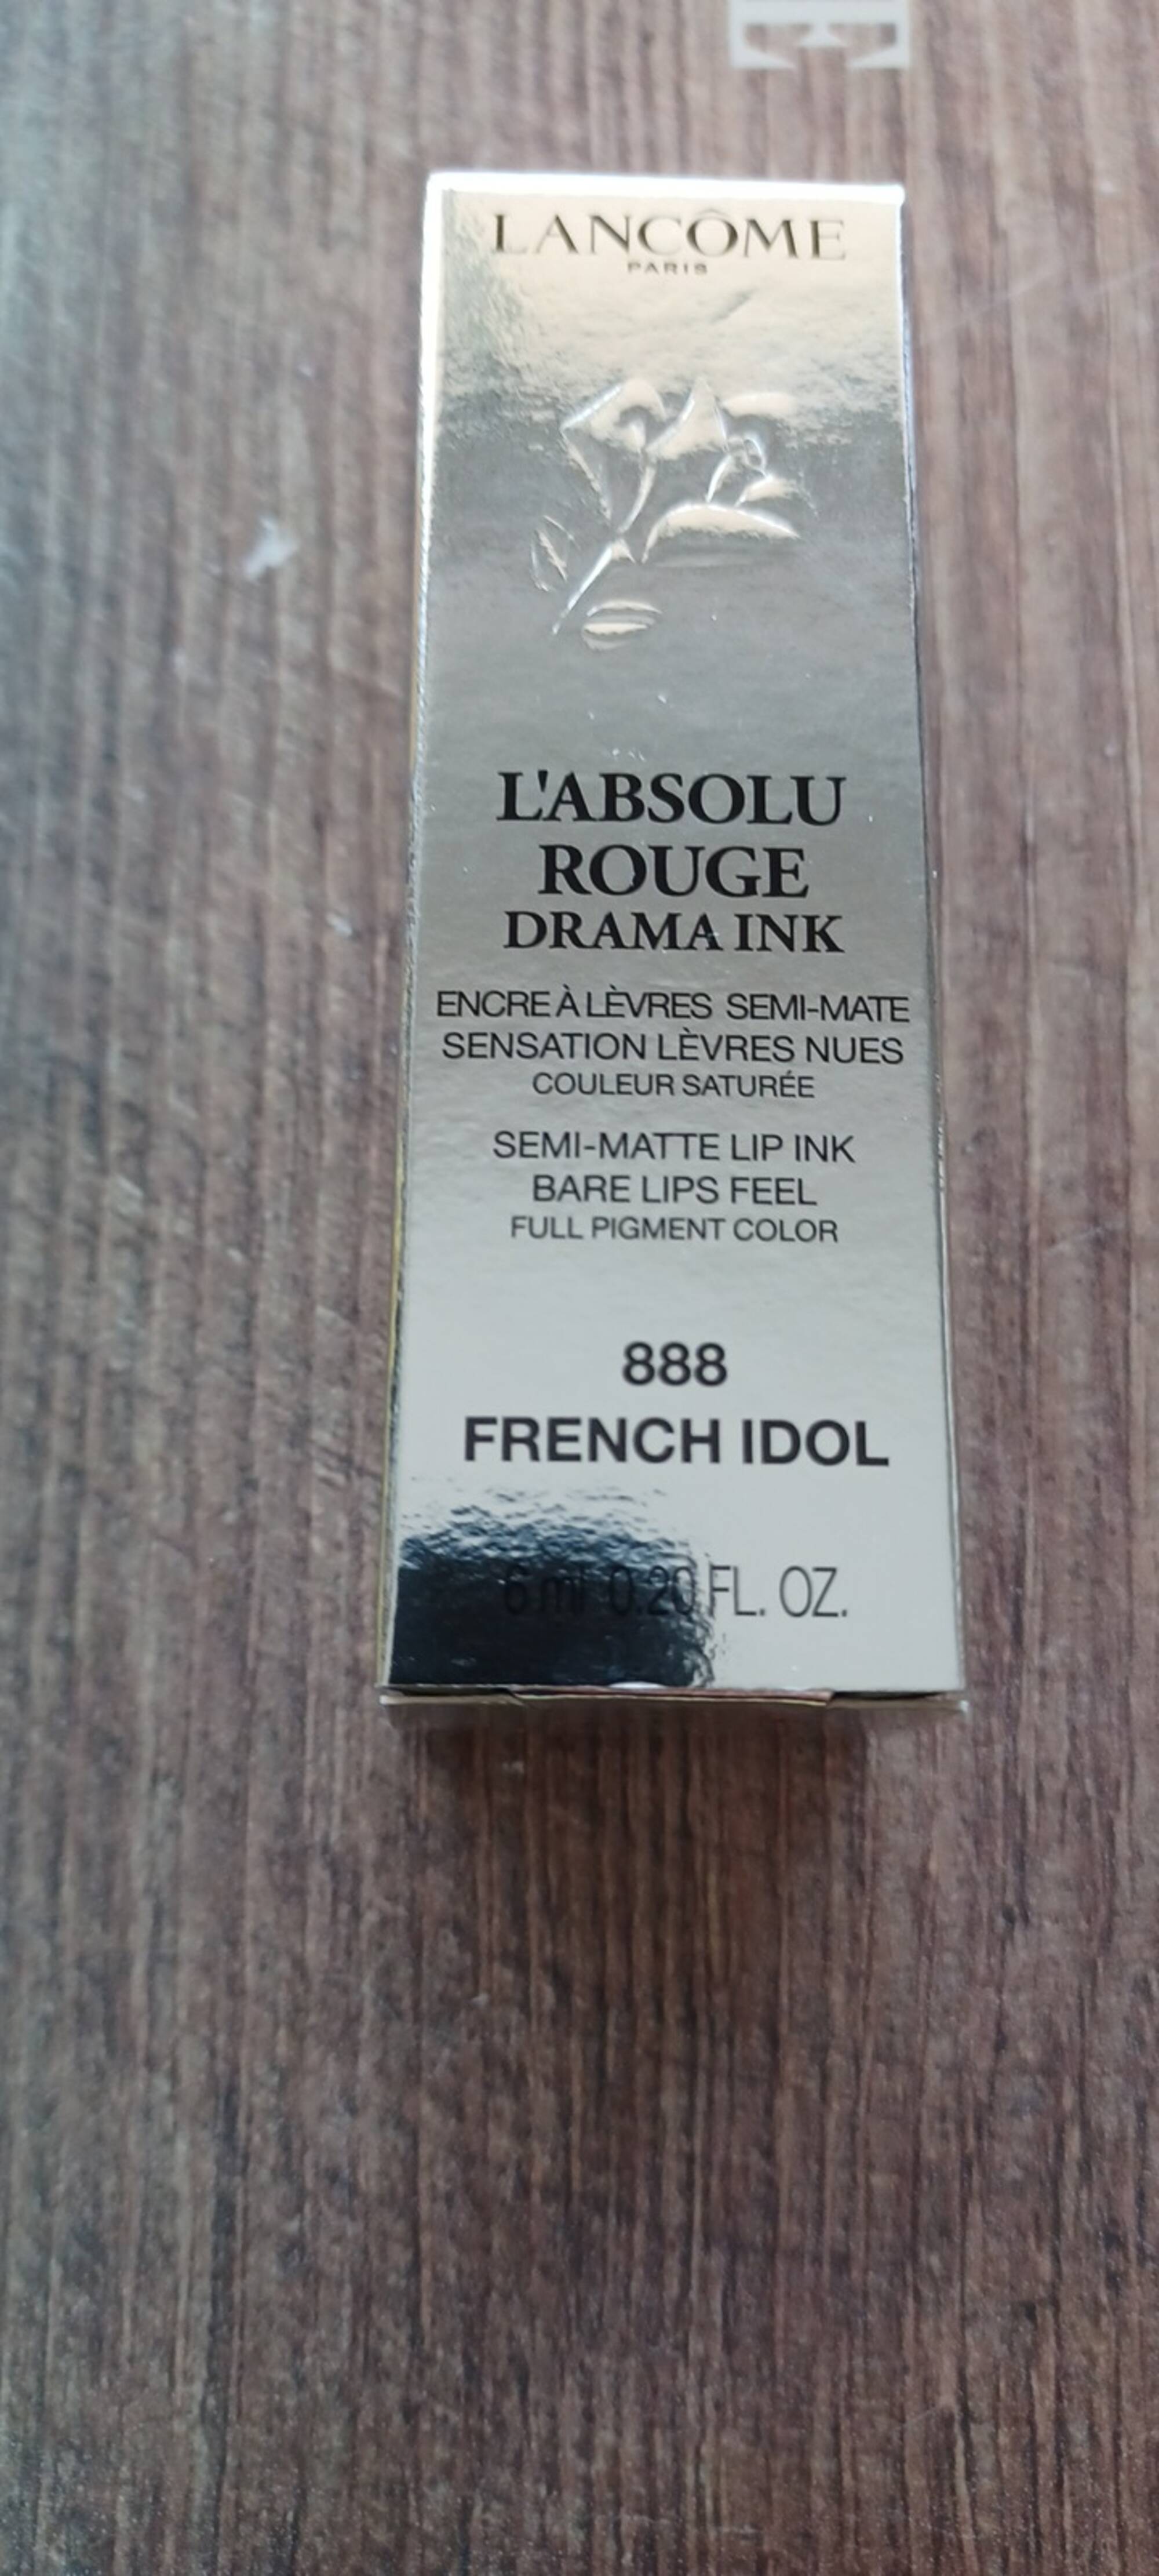 LANCÔME - L'absolu rouge drama ink - Encre à lèvres 888 french idol